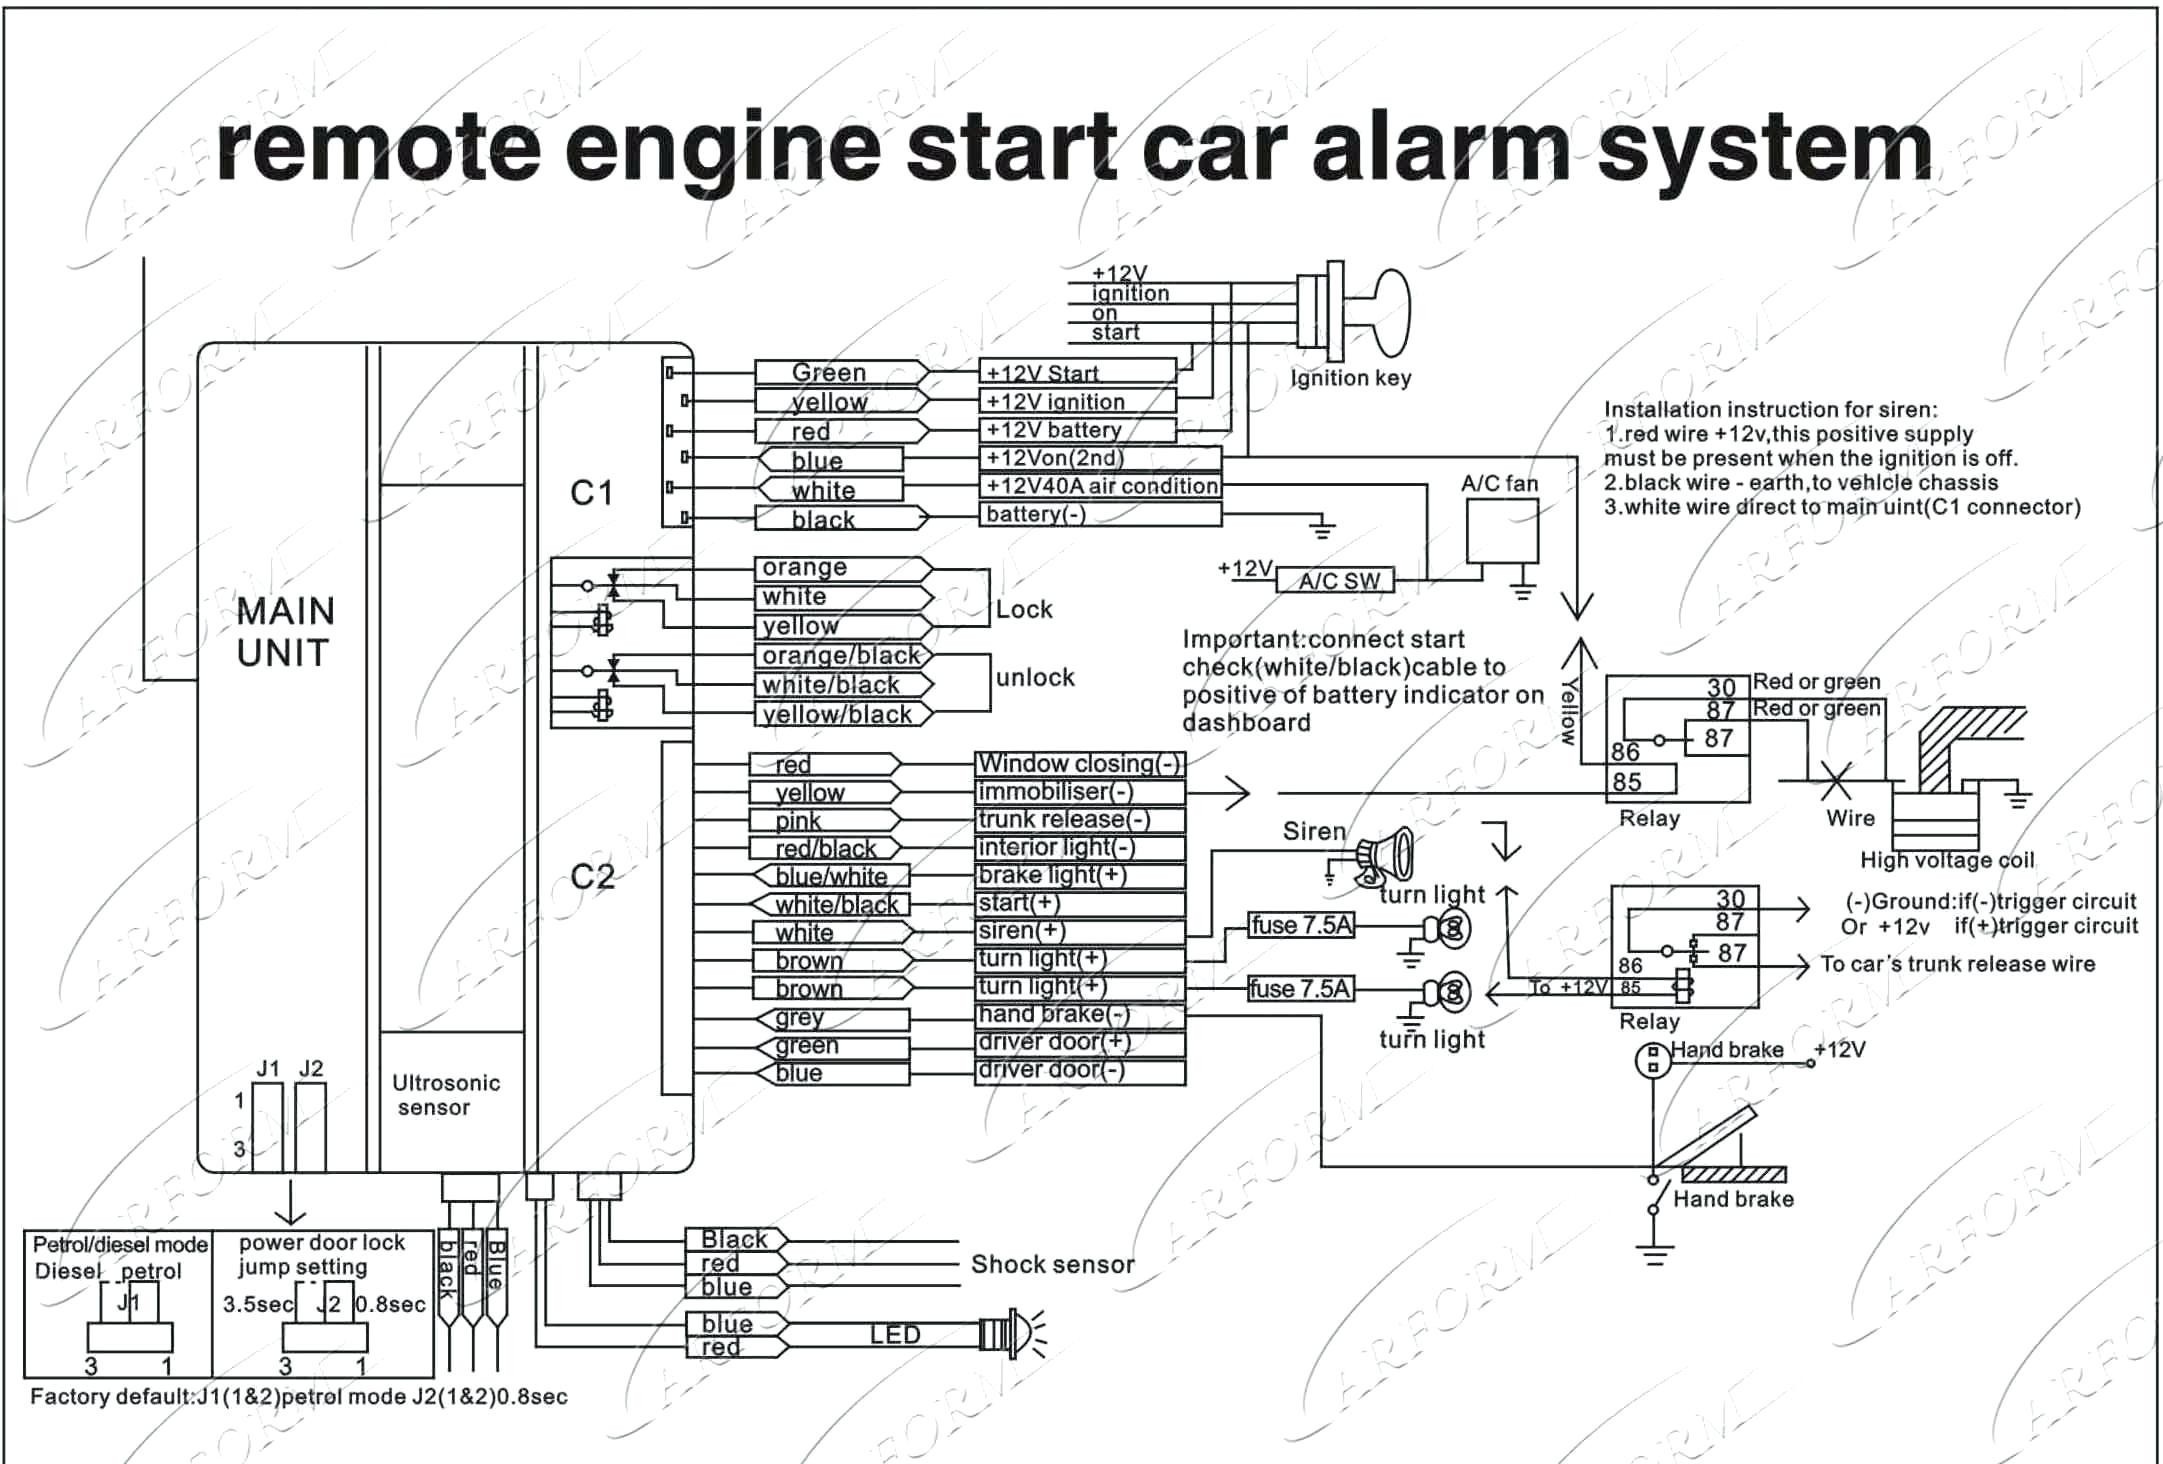 Vehicle Wiring Diagrams For Remote Starts Reference Bulldog Car Alarm Wiring Diagram Image